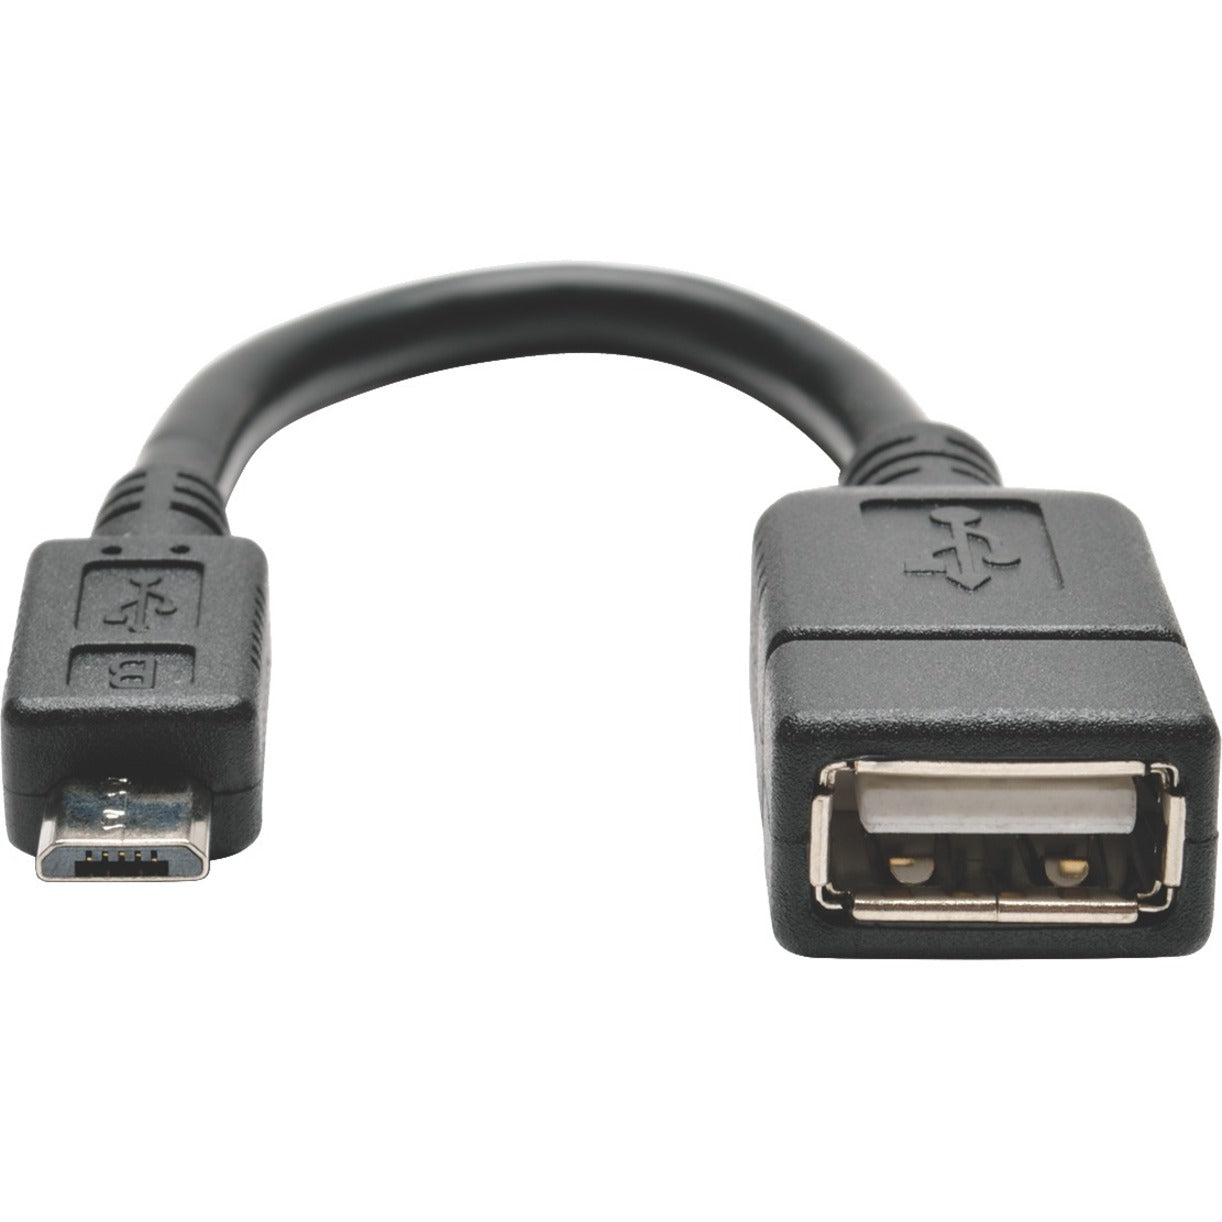 Tripp Lite U052-06N USB OTG Adapter, Data Transfer Cable, 6", Smartphone, Keyboard, Mouse, Tablet